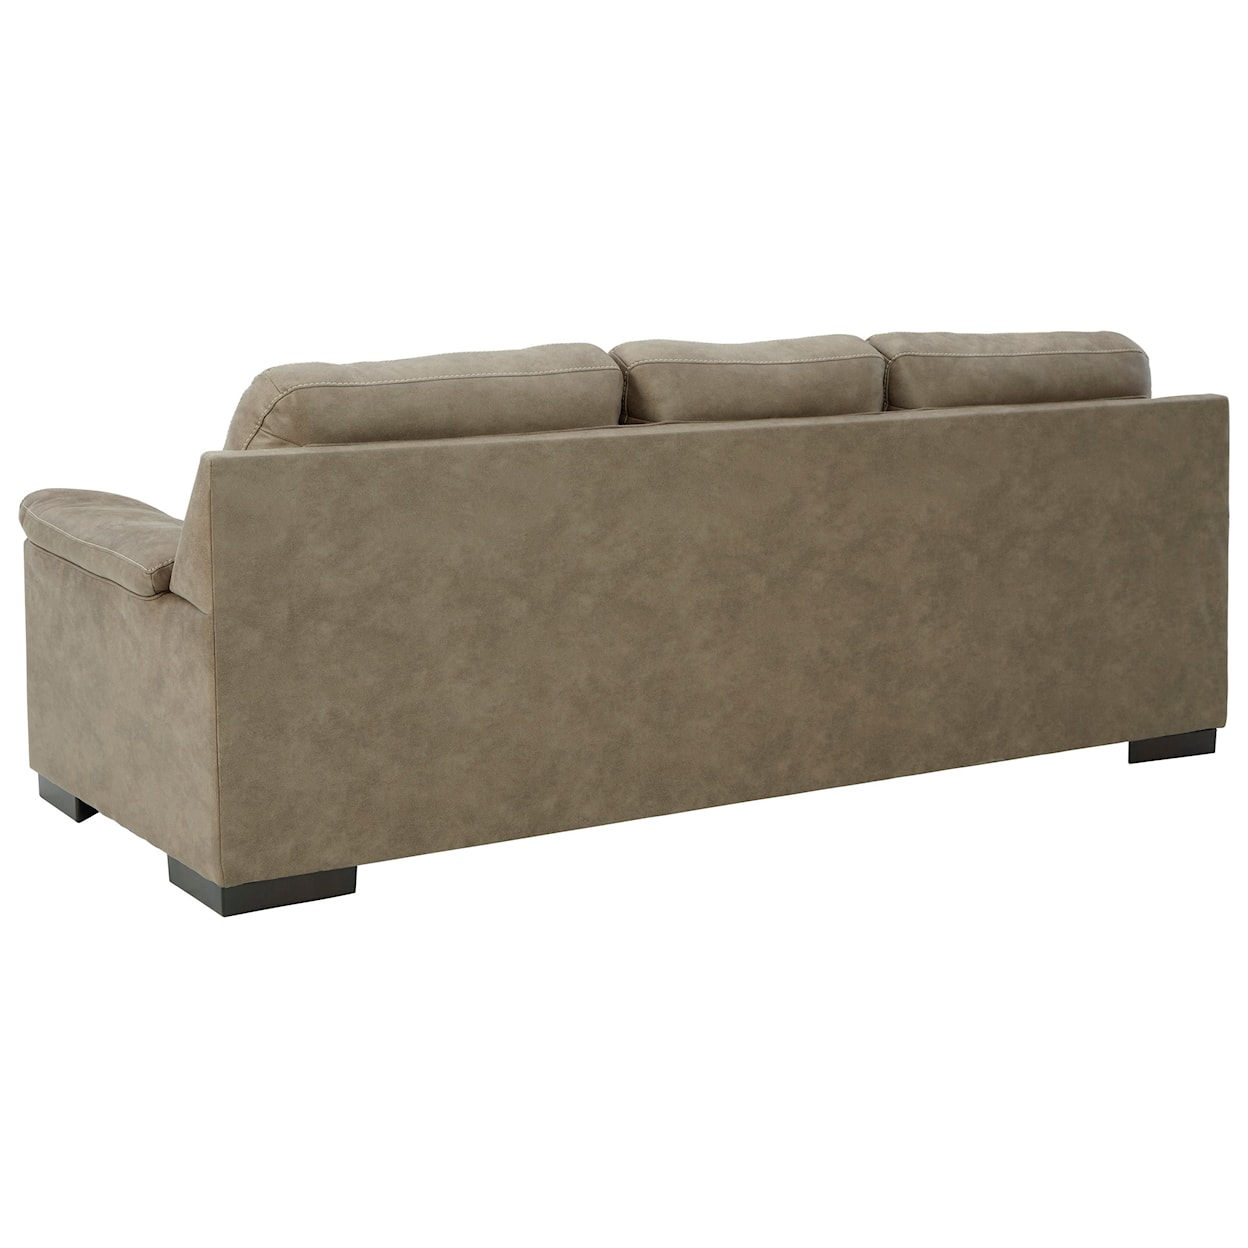 Ashley Furniture Signature Design Maderla Sofa